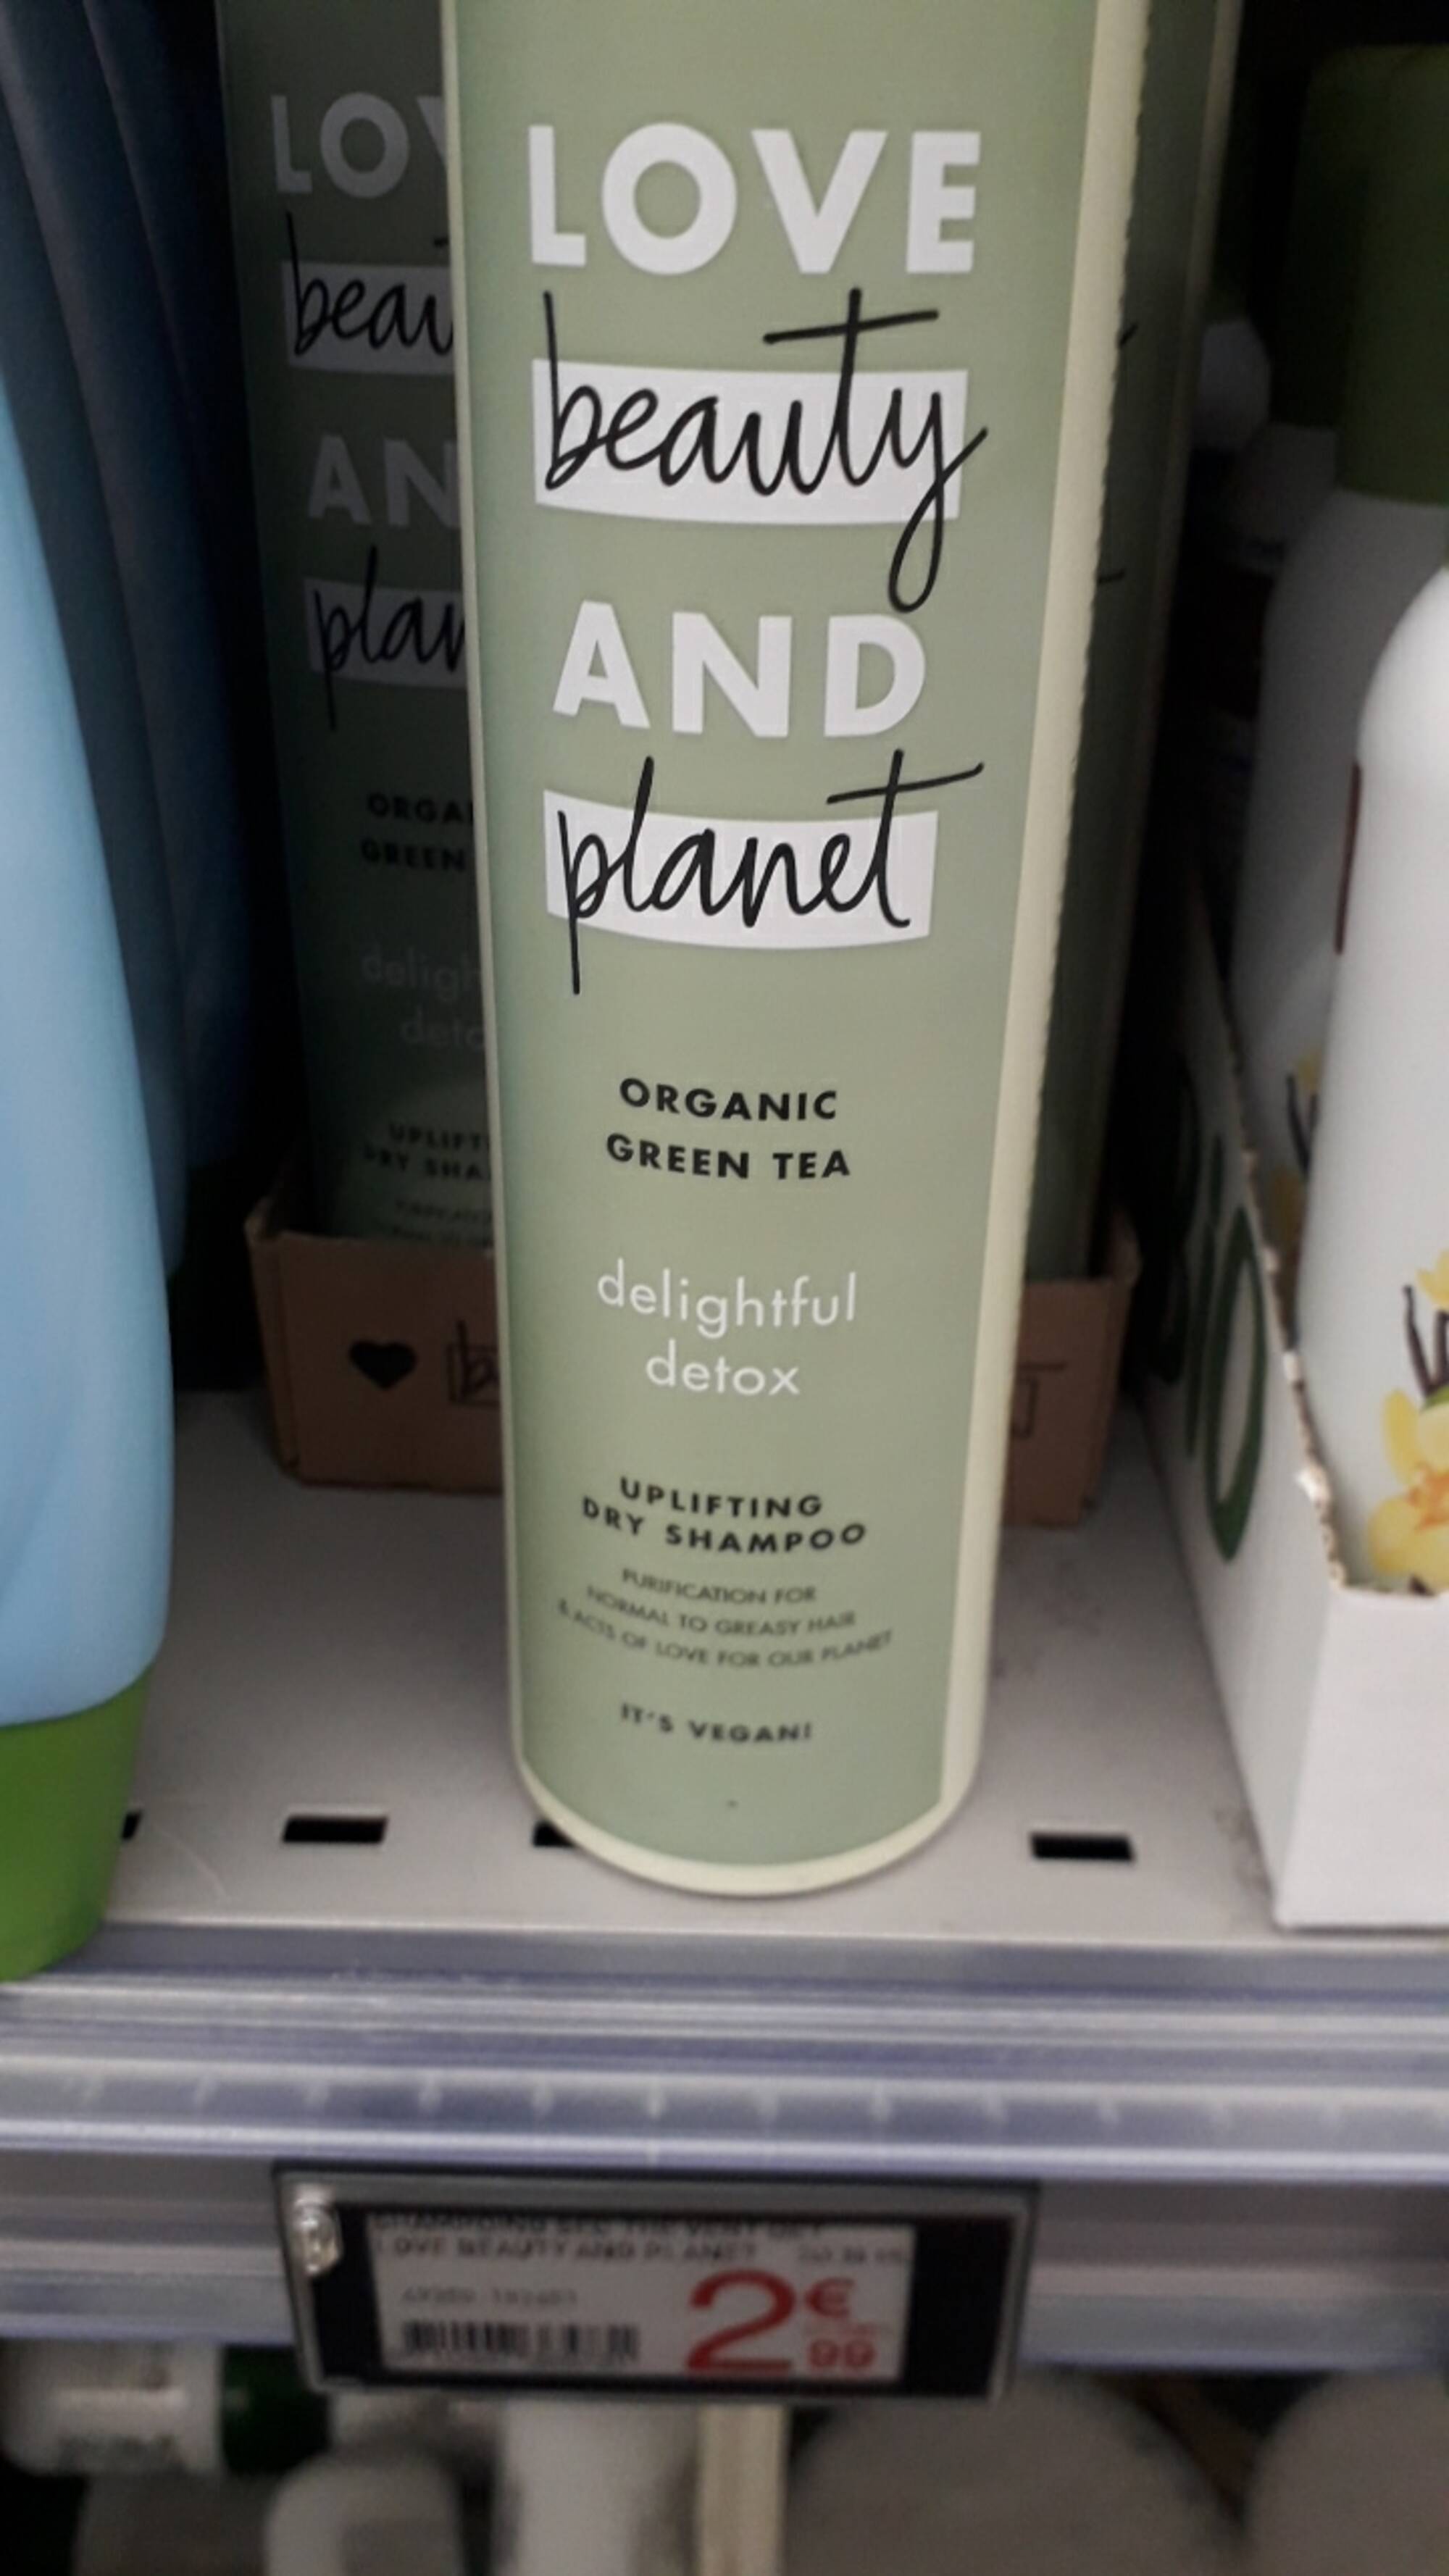 LOVE BEAUTY AND PLANET - Organic green tea - Uplifting dry shampoo